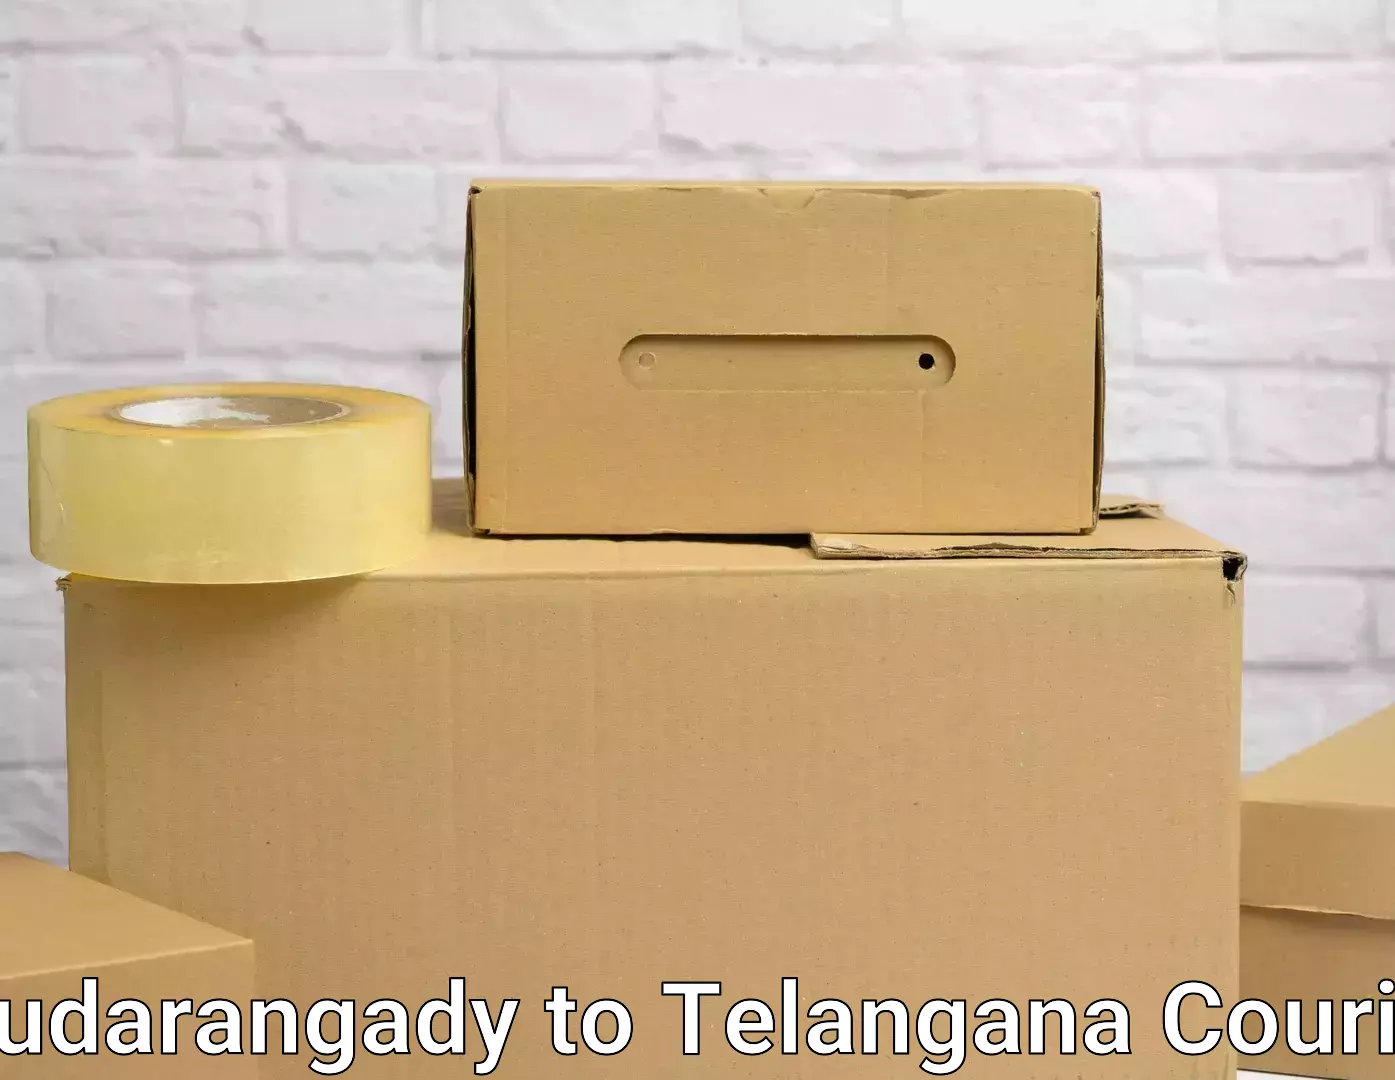 Furniture transport company Mudarangady to Telangana